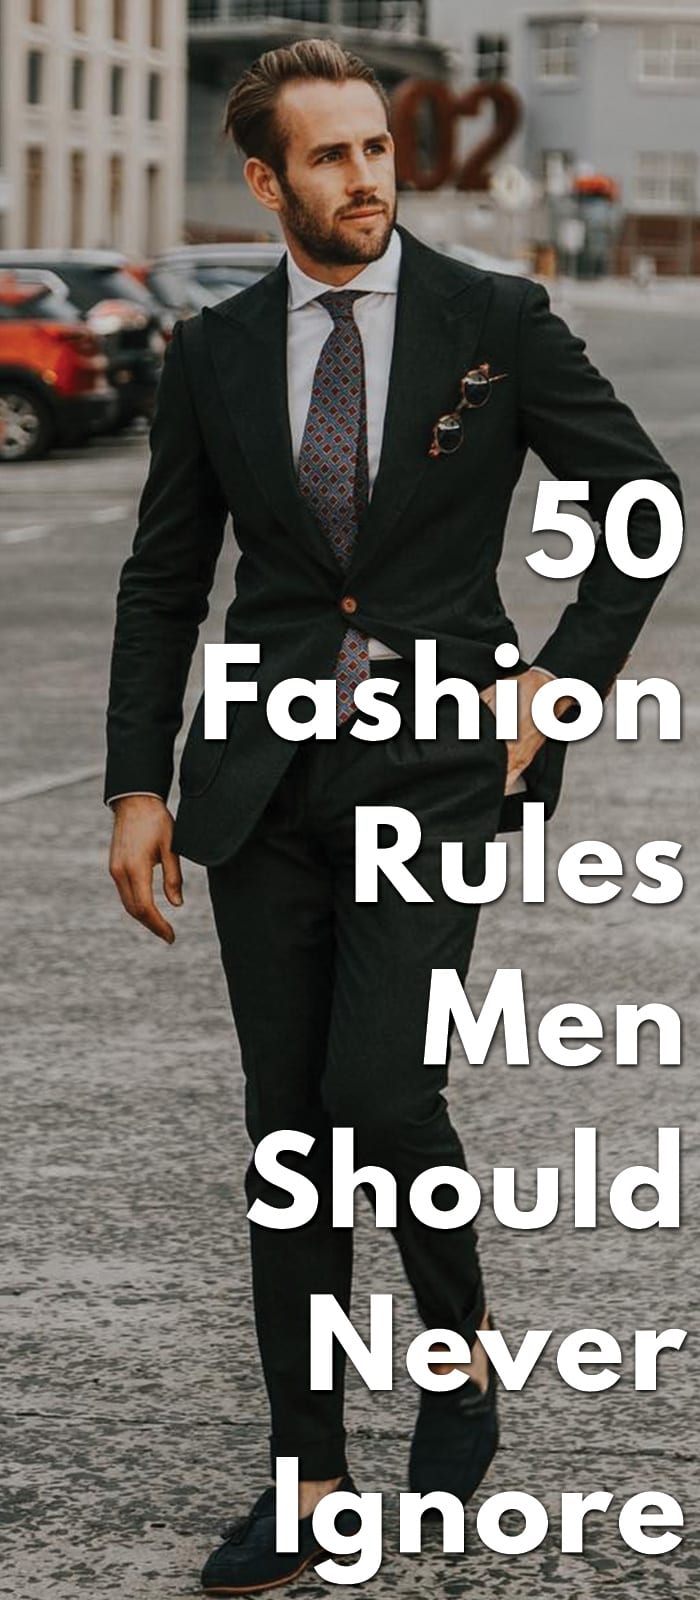 50-Fashion-Rules-Men-Should-Never-Ignore...